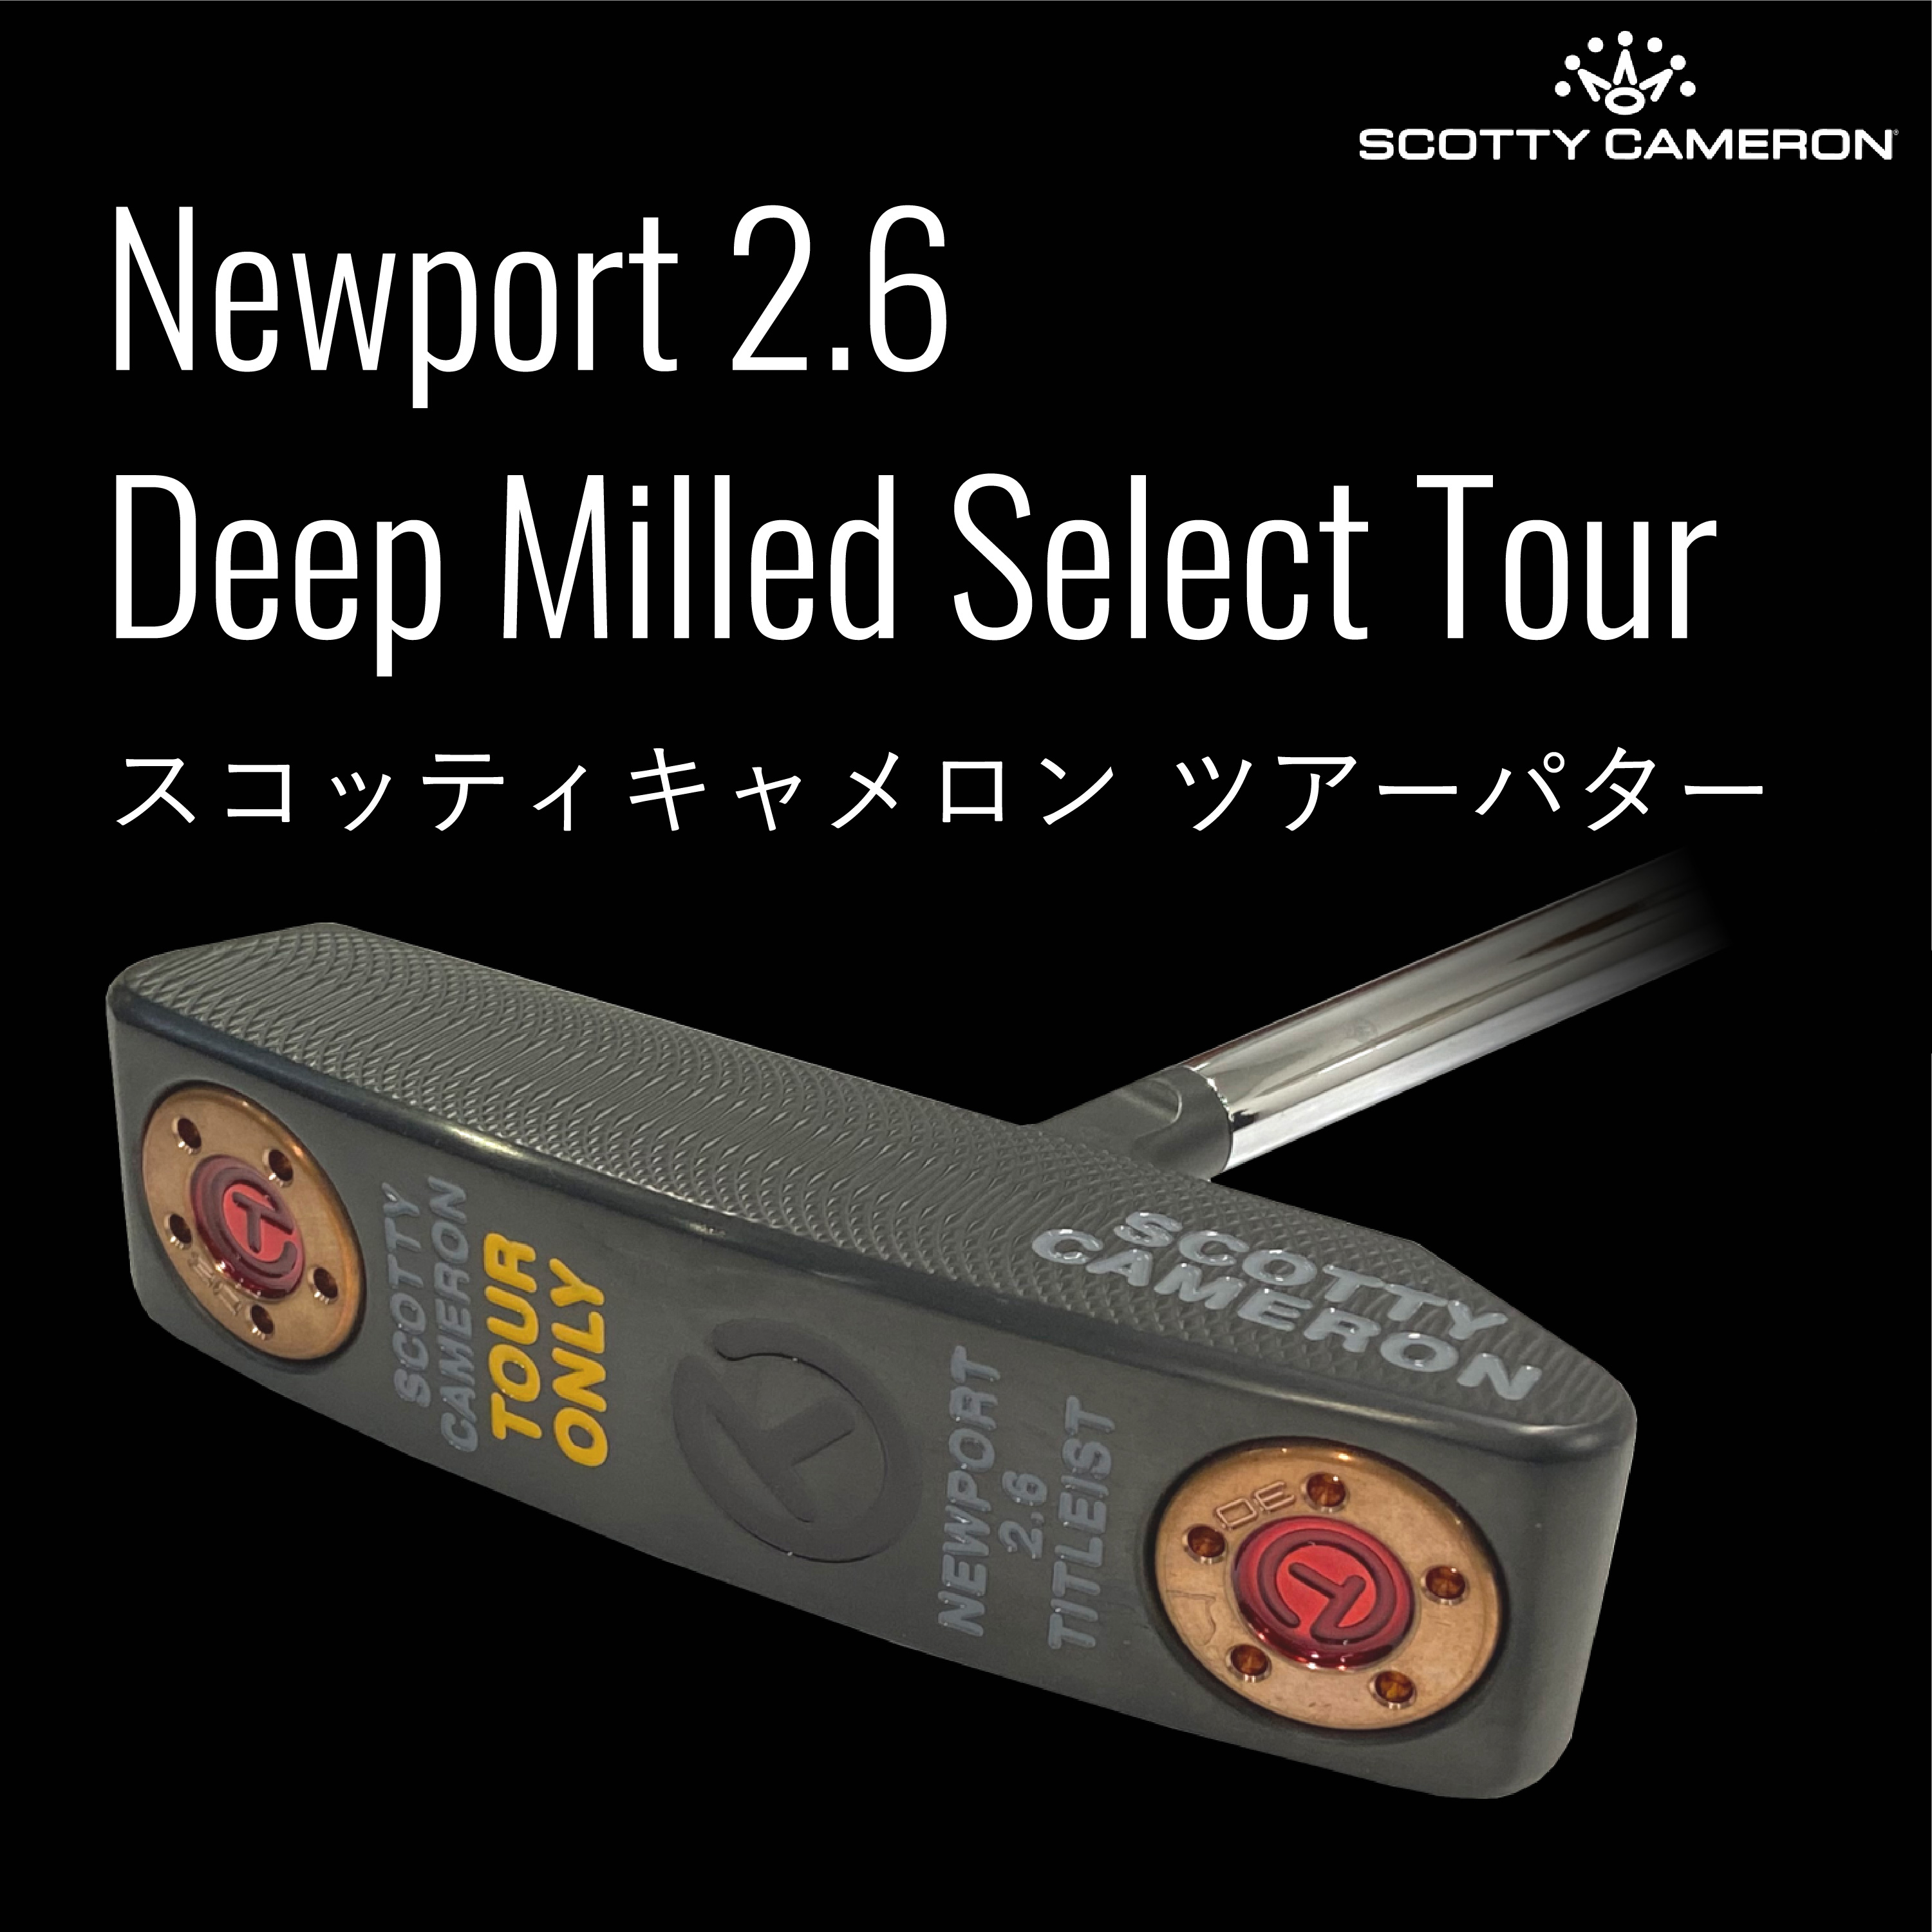 Scotty Cameron Newport 2.6 Deep Milled Select Tour